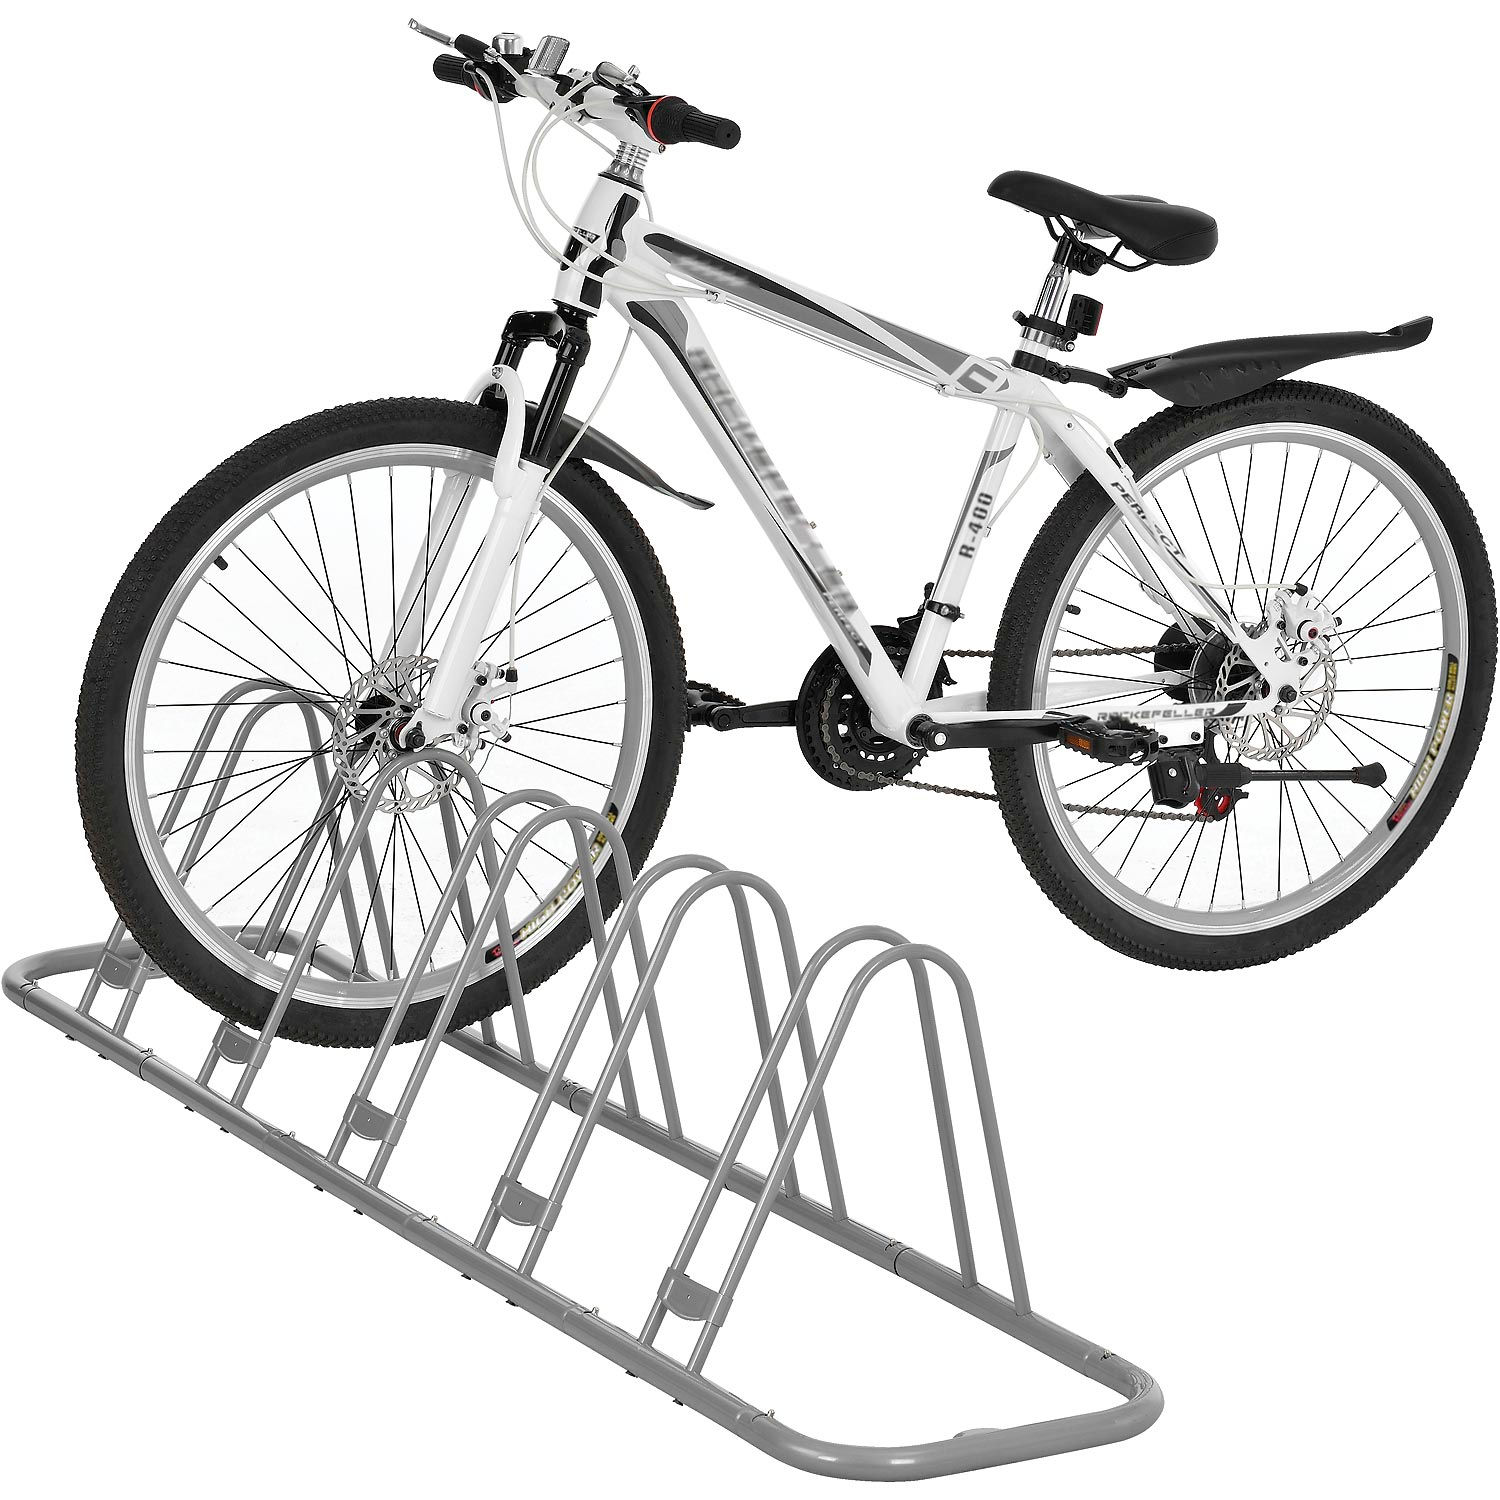 adjustable bike rack